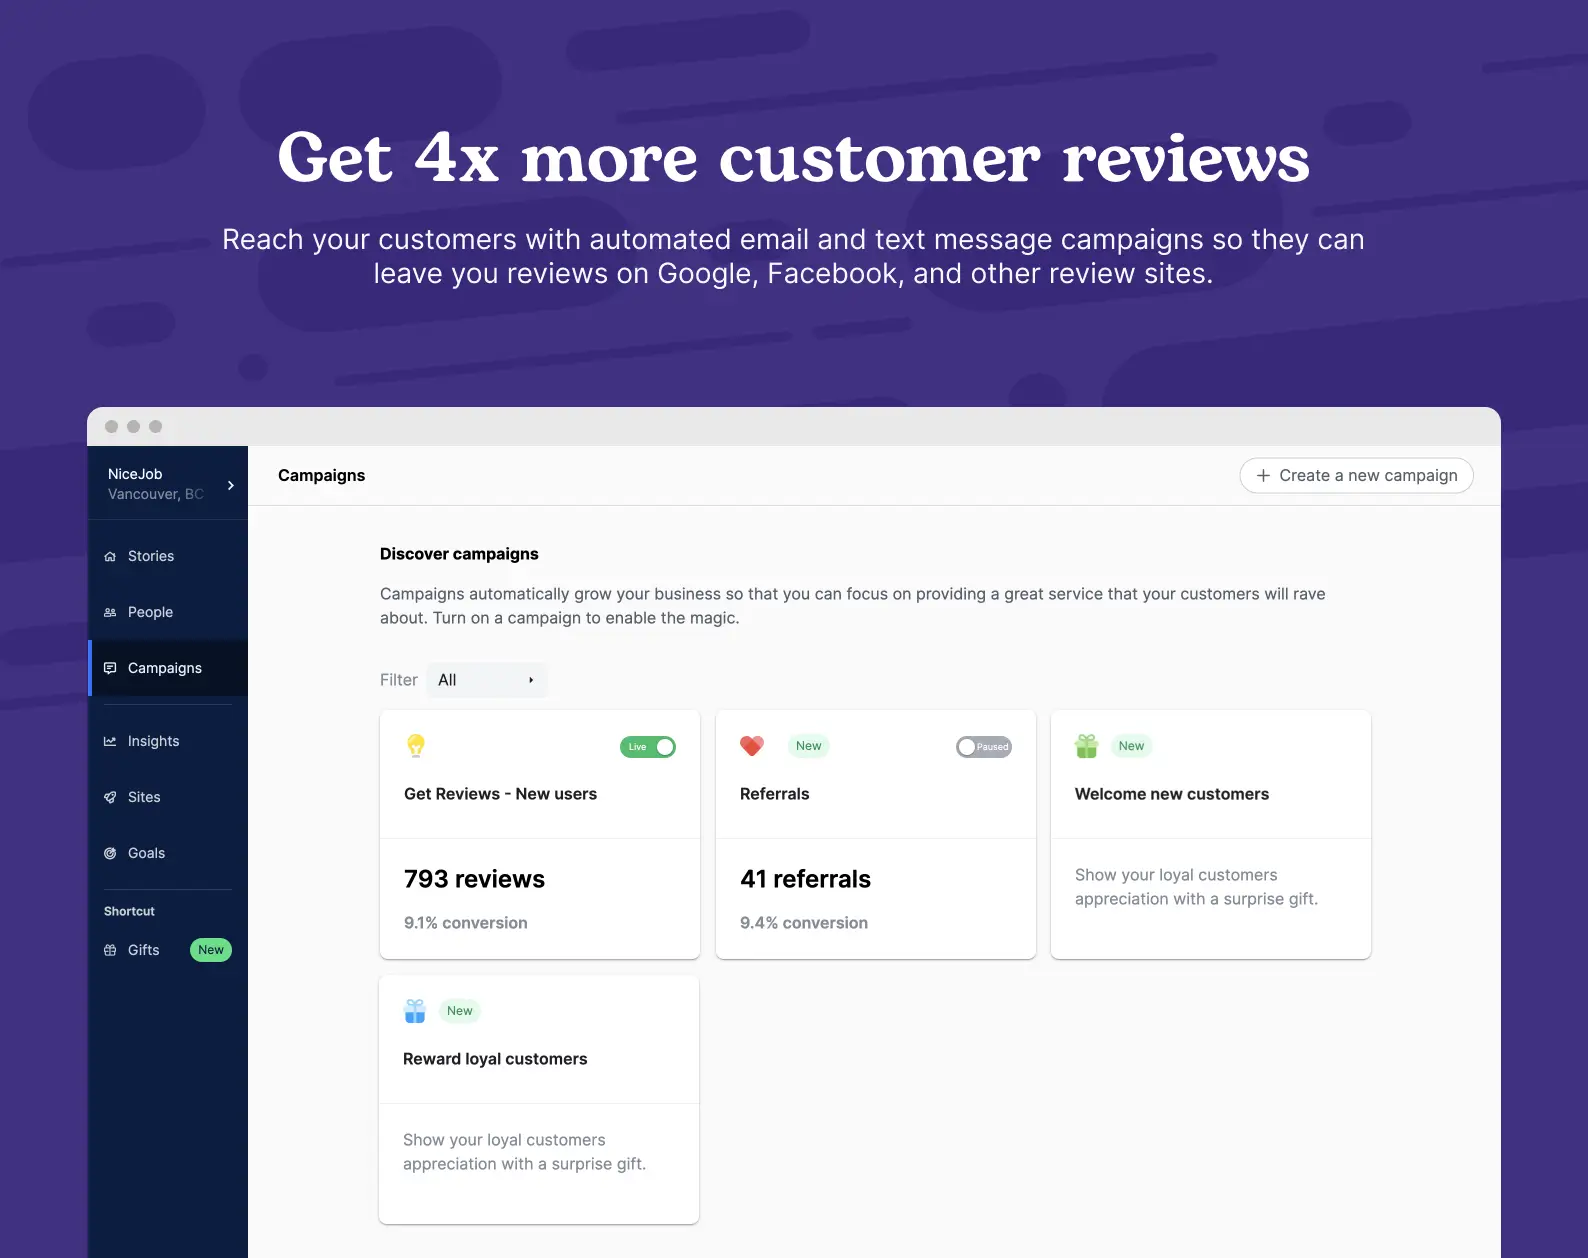 Get 4x more customer reviews